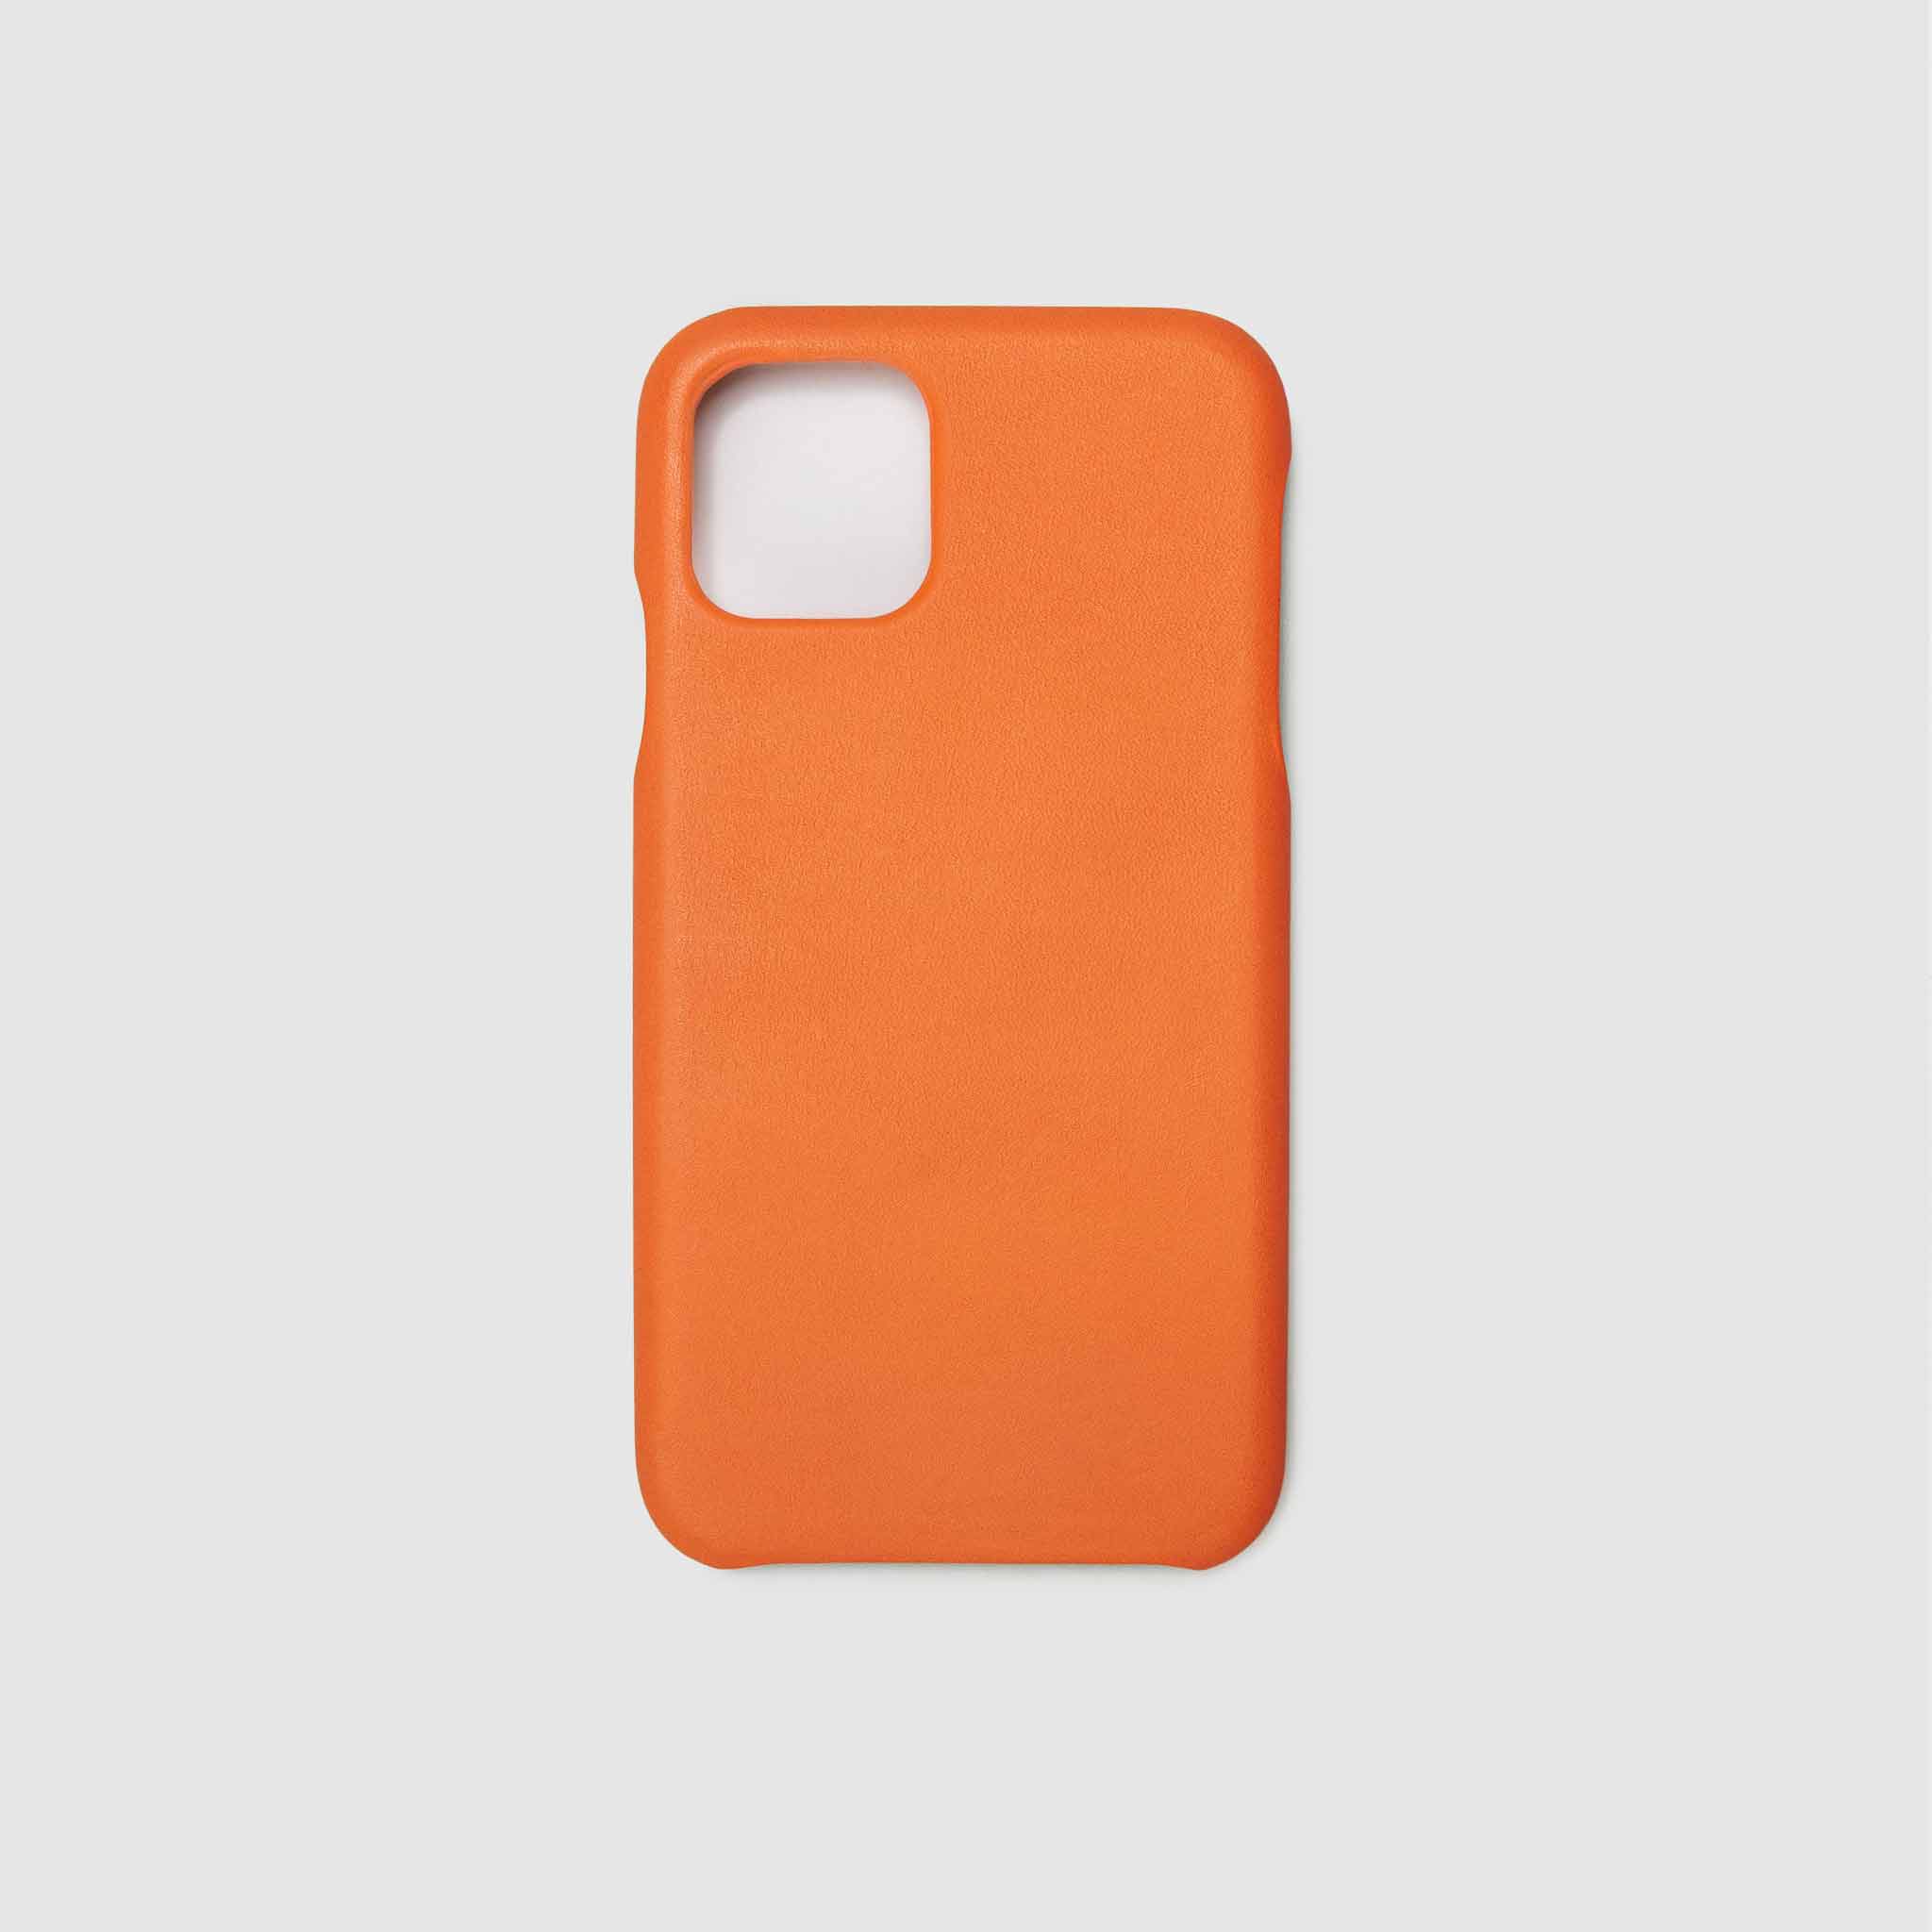 anson calder iphone case french calfskin 11 eleven pro max leather !iphone11pro-iphone11promax _fshd-orange